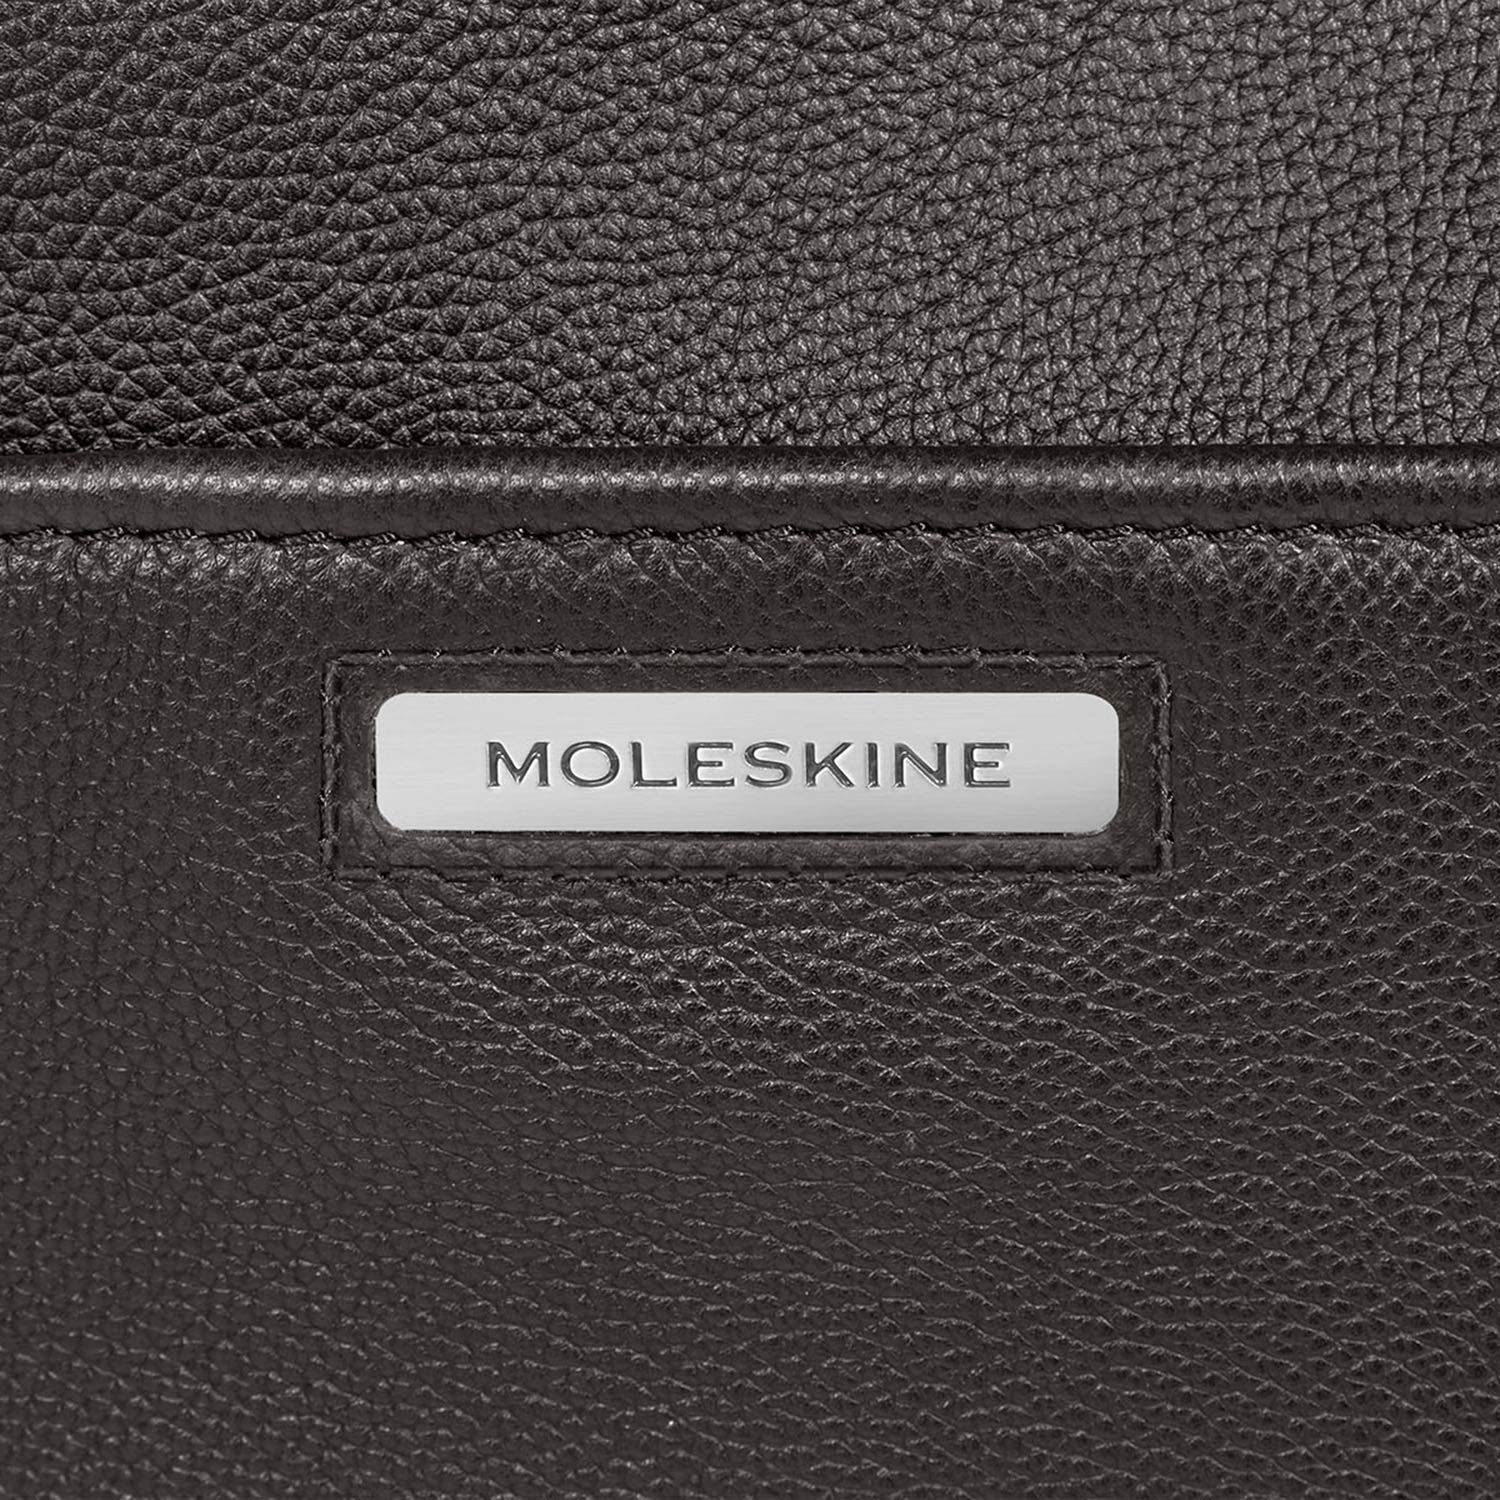 Moleskine(モレスキン) Moleskine Bag Classic Match Leather Slim Briefcase